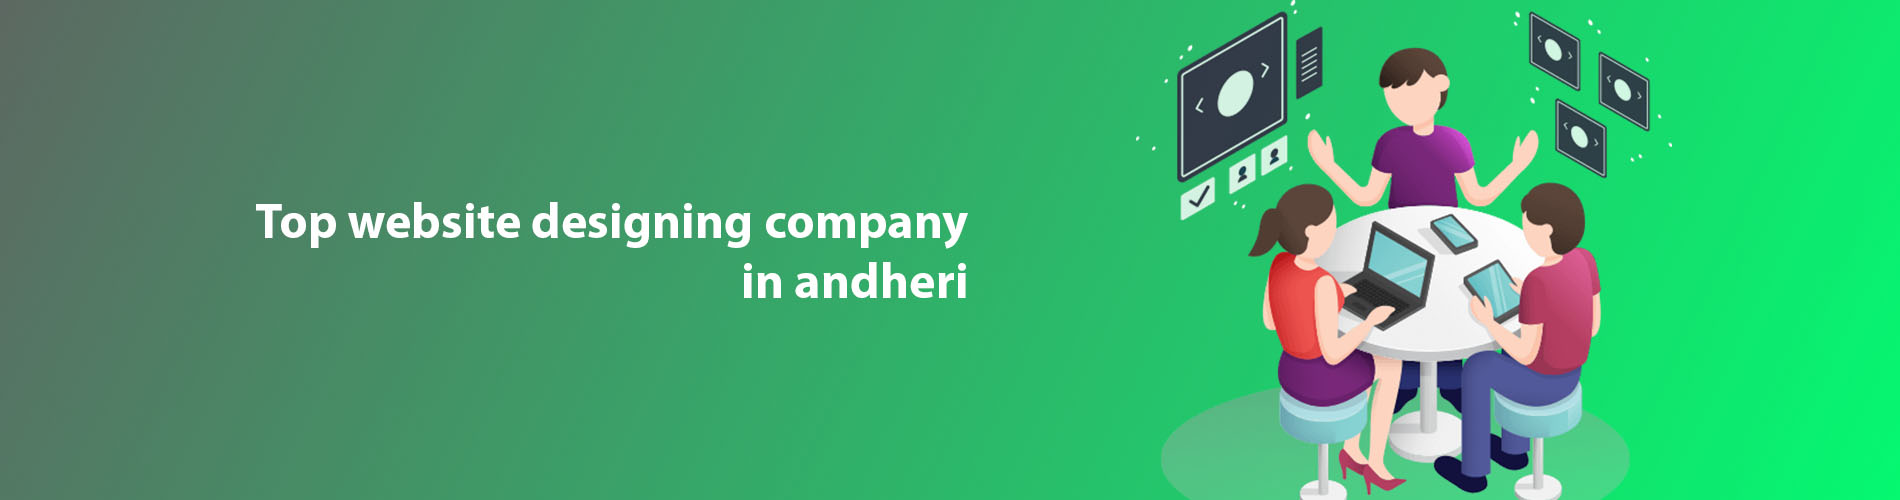 web designing company in andheri mumbai